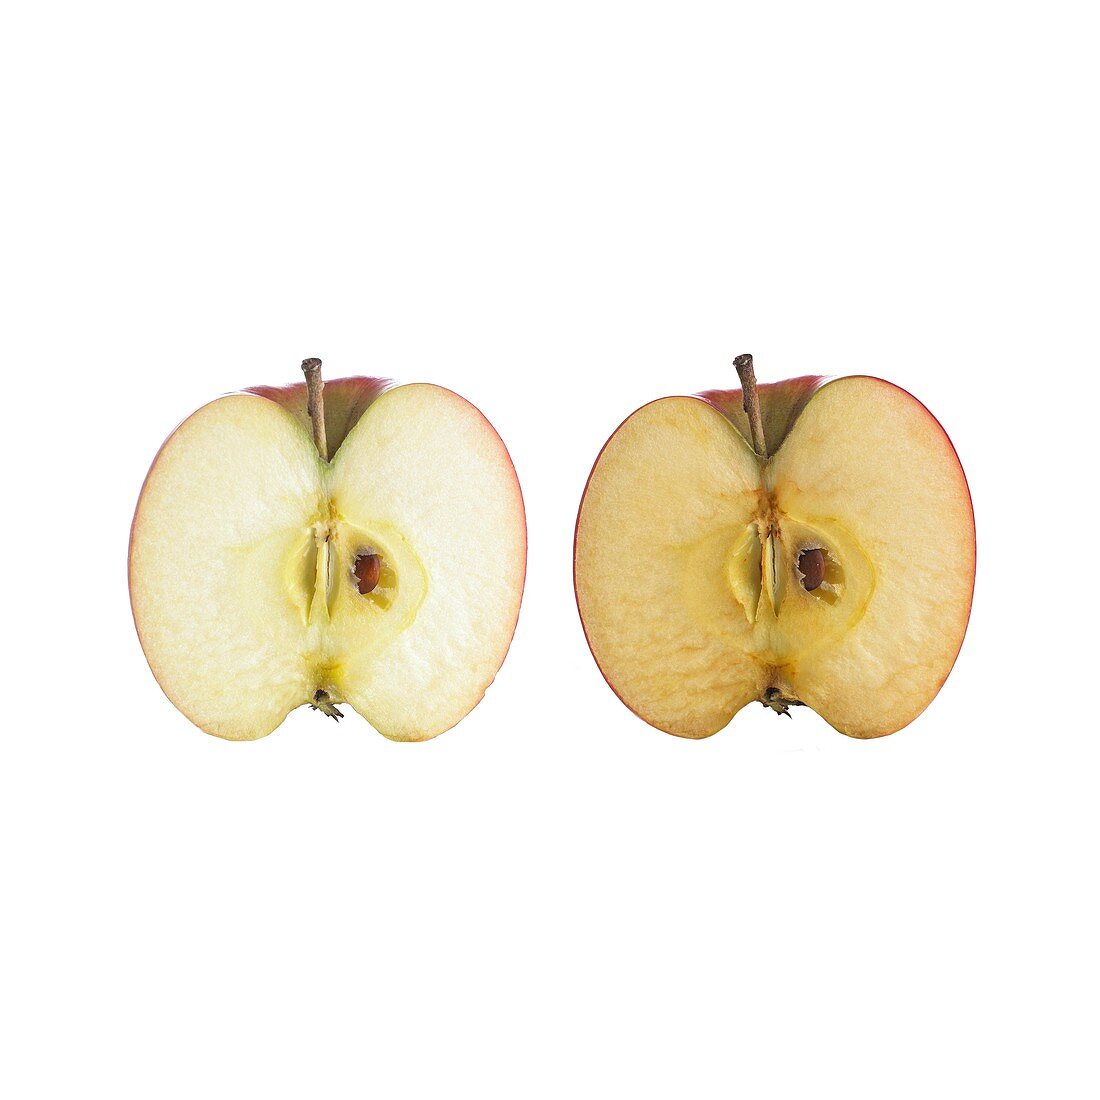 Cut apple